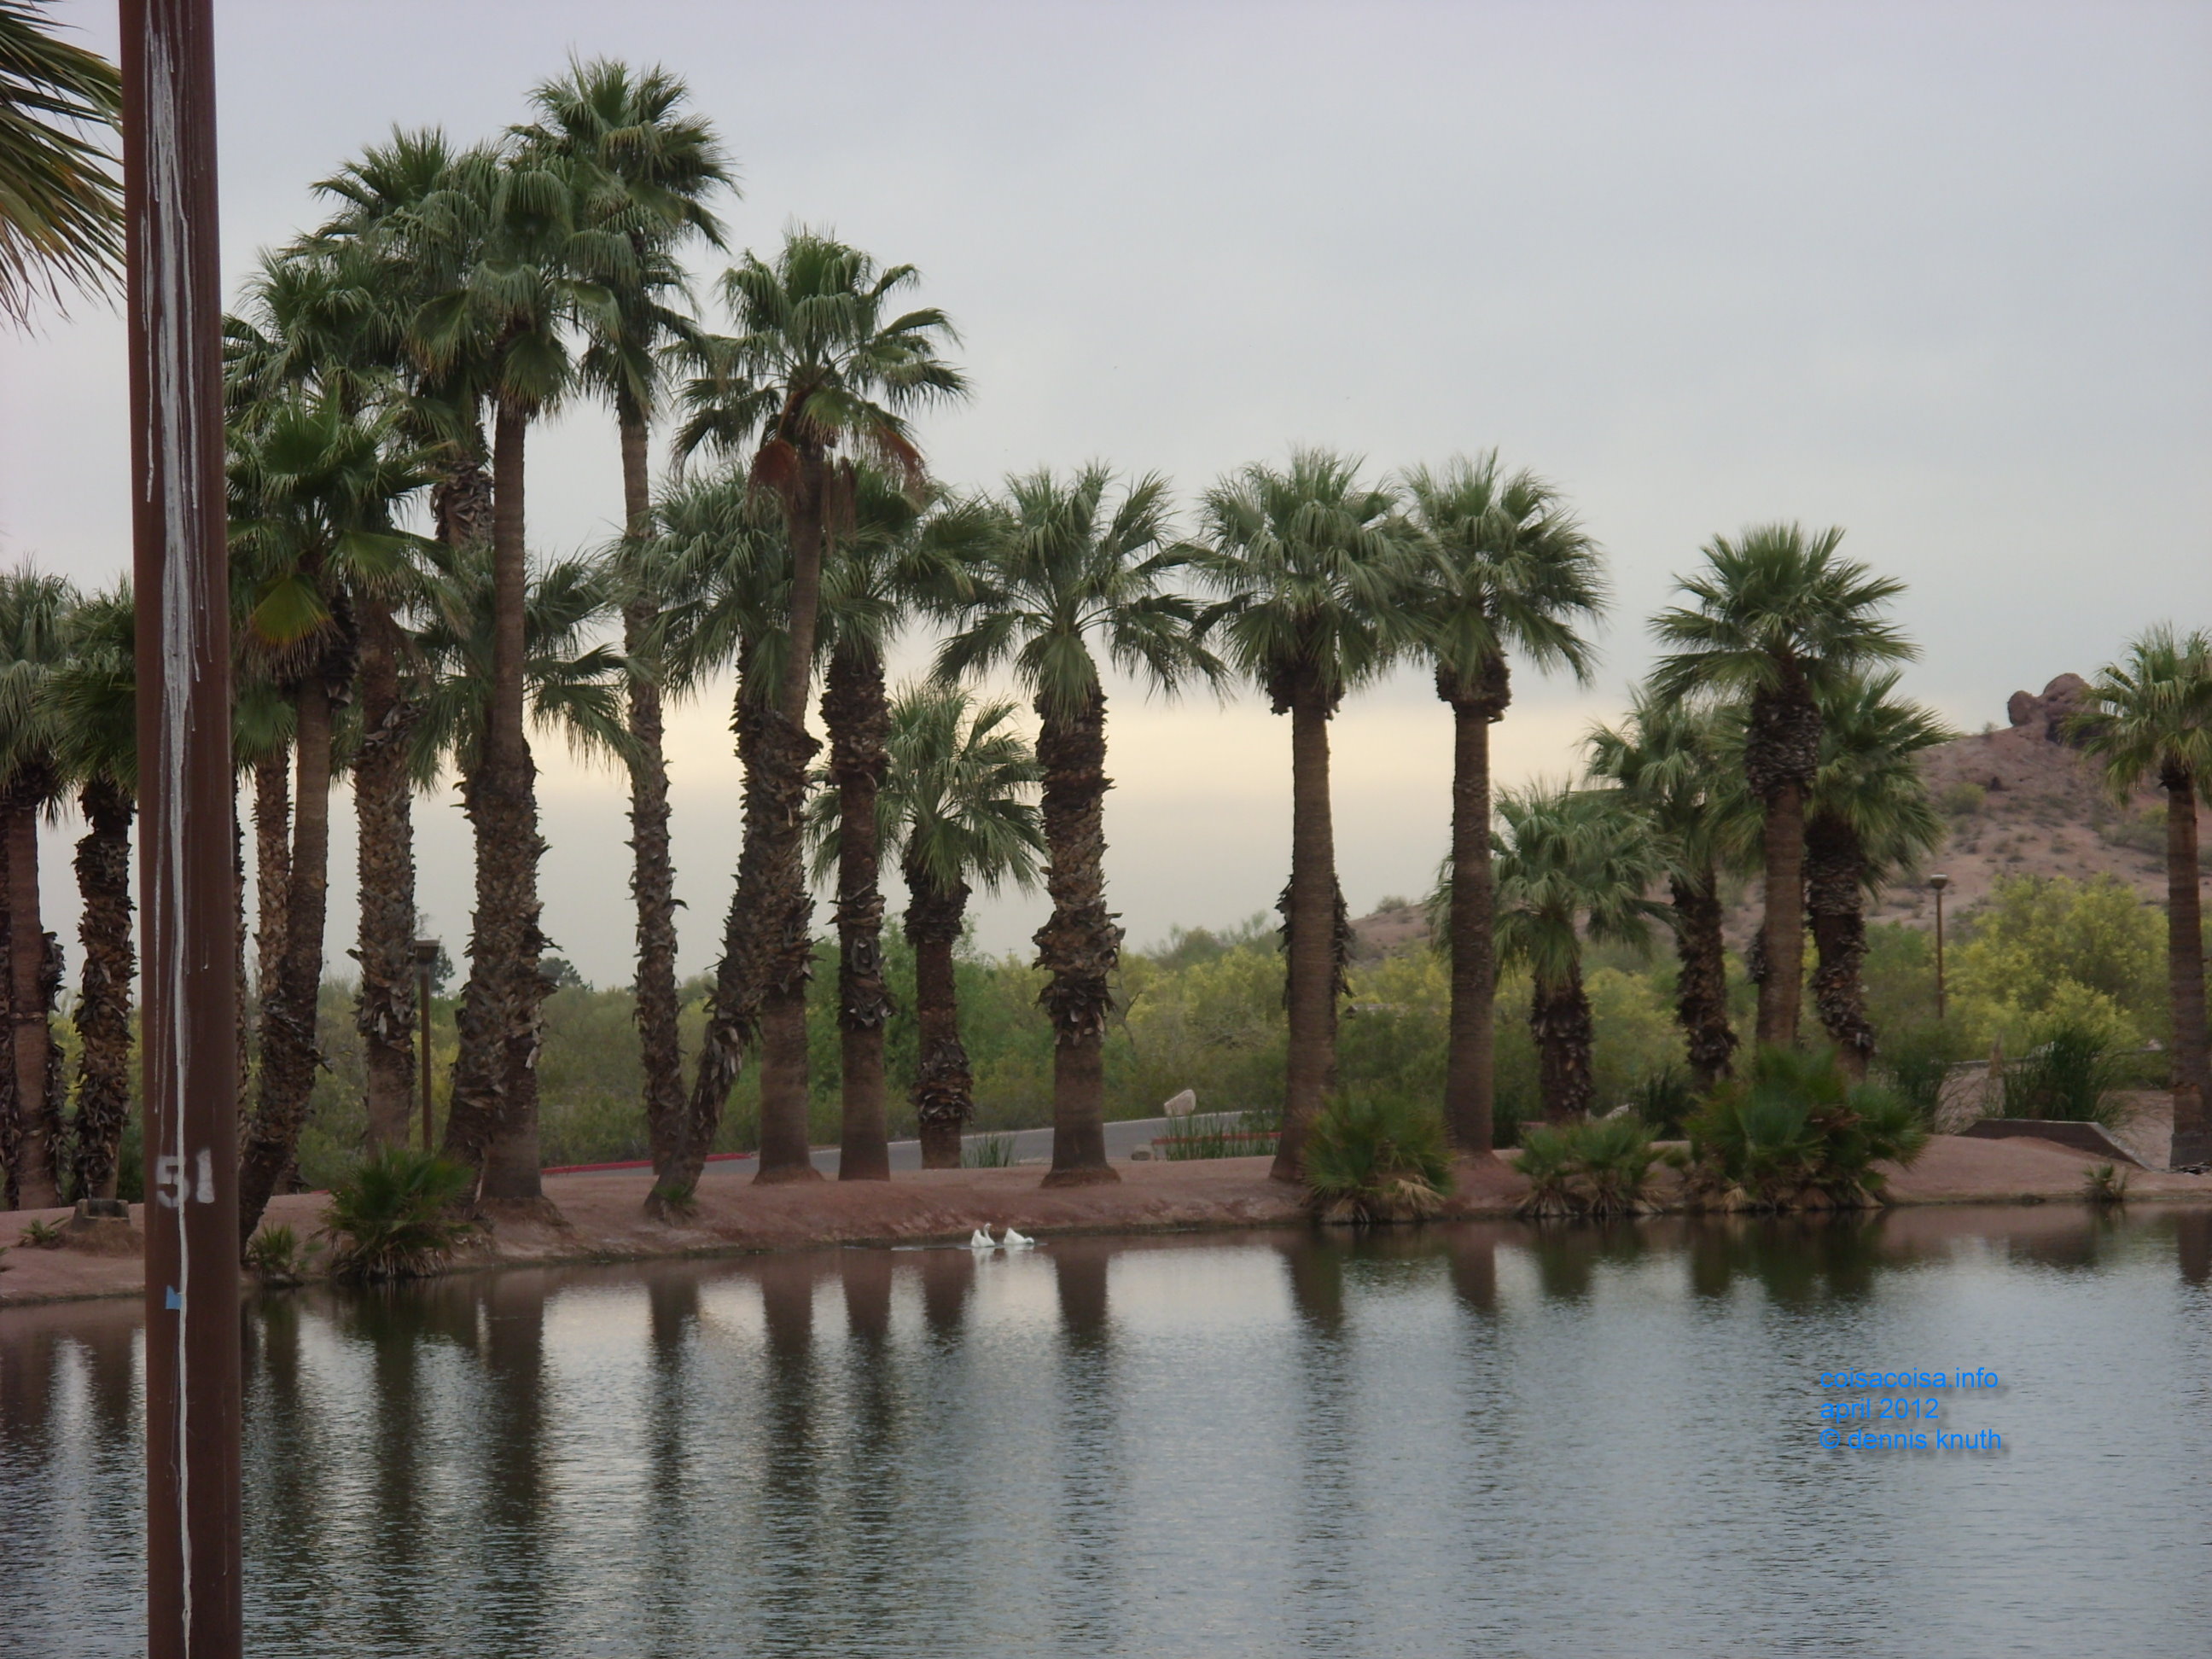 Papago Park ponds and palms